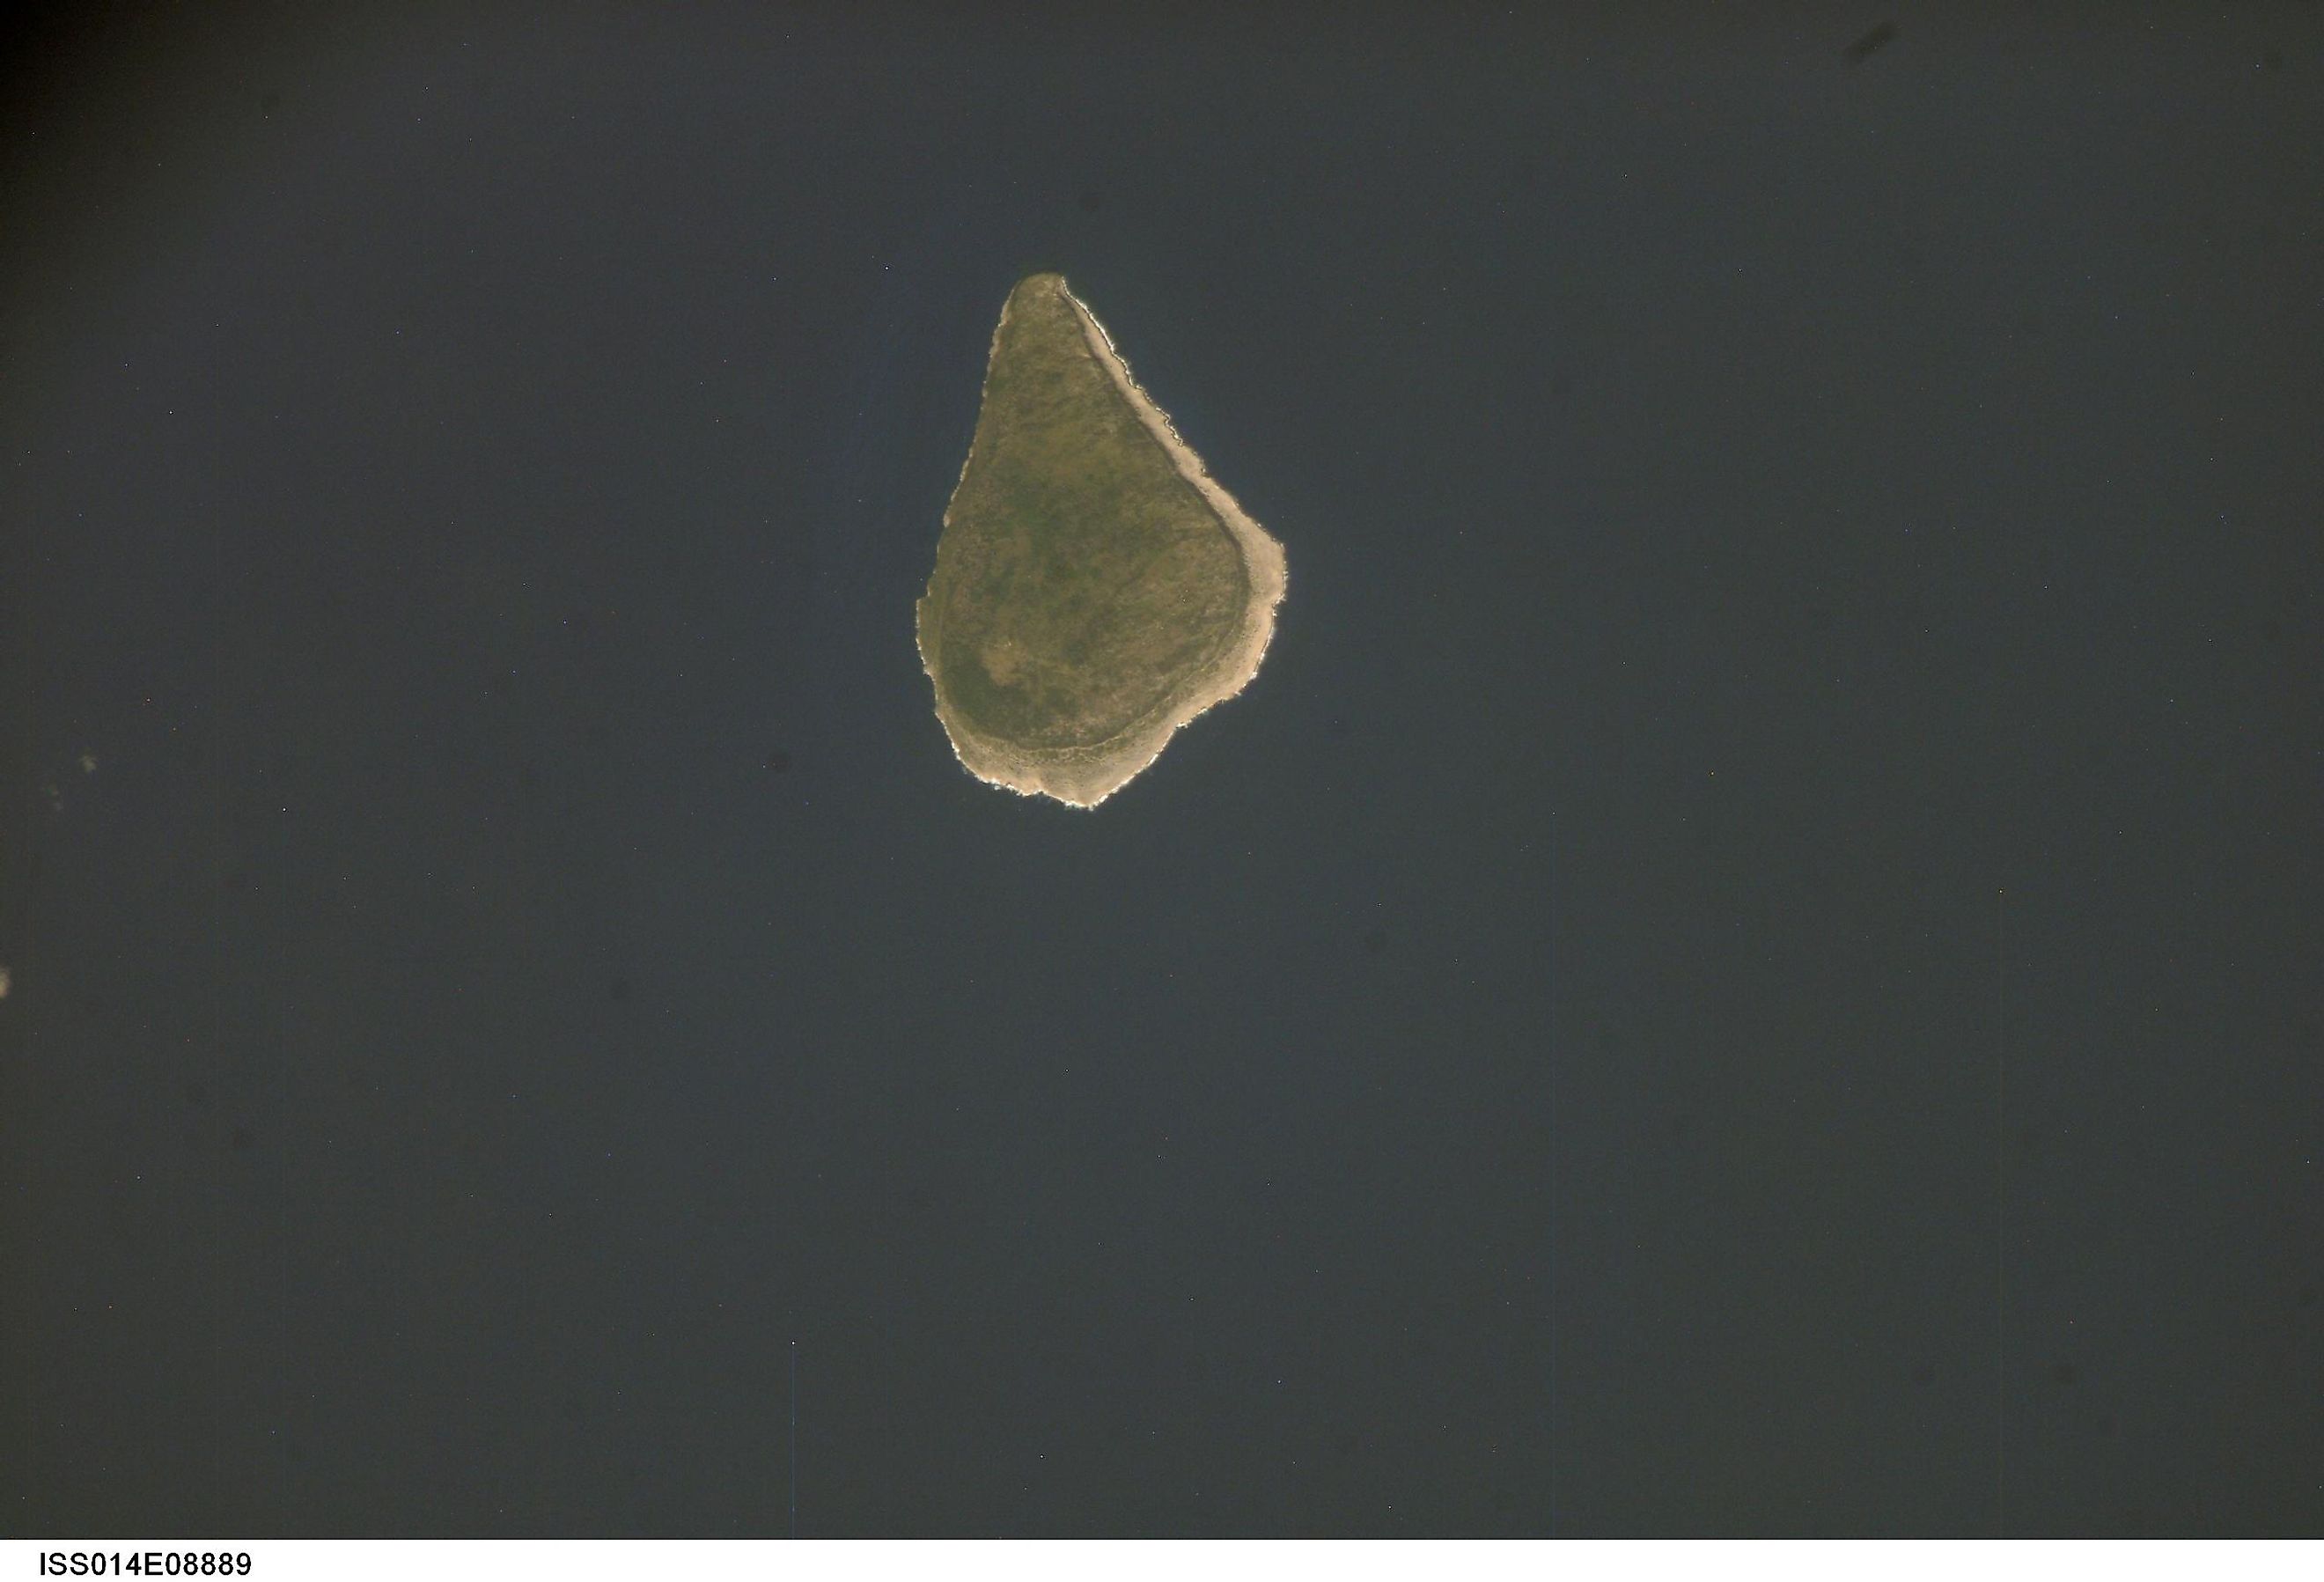 Astronaut photo of teardrop-shaped Navassa Island. The island is basically a plateau encircled by fairly steep cliffs.